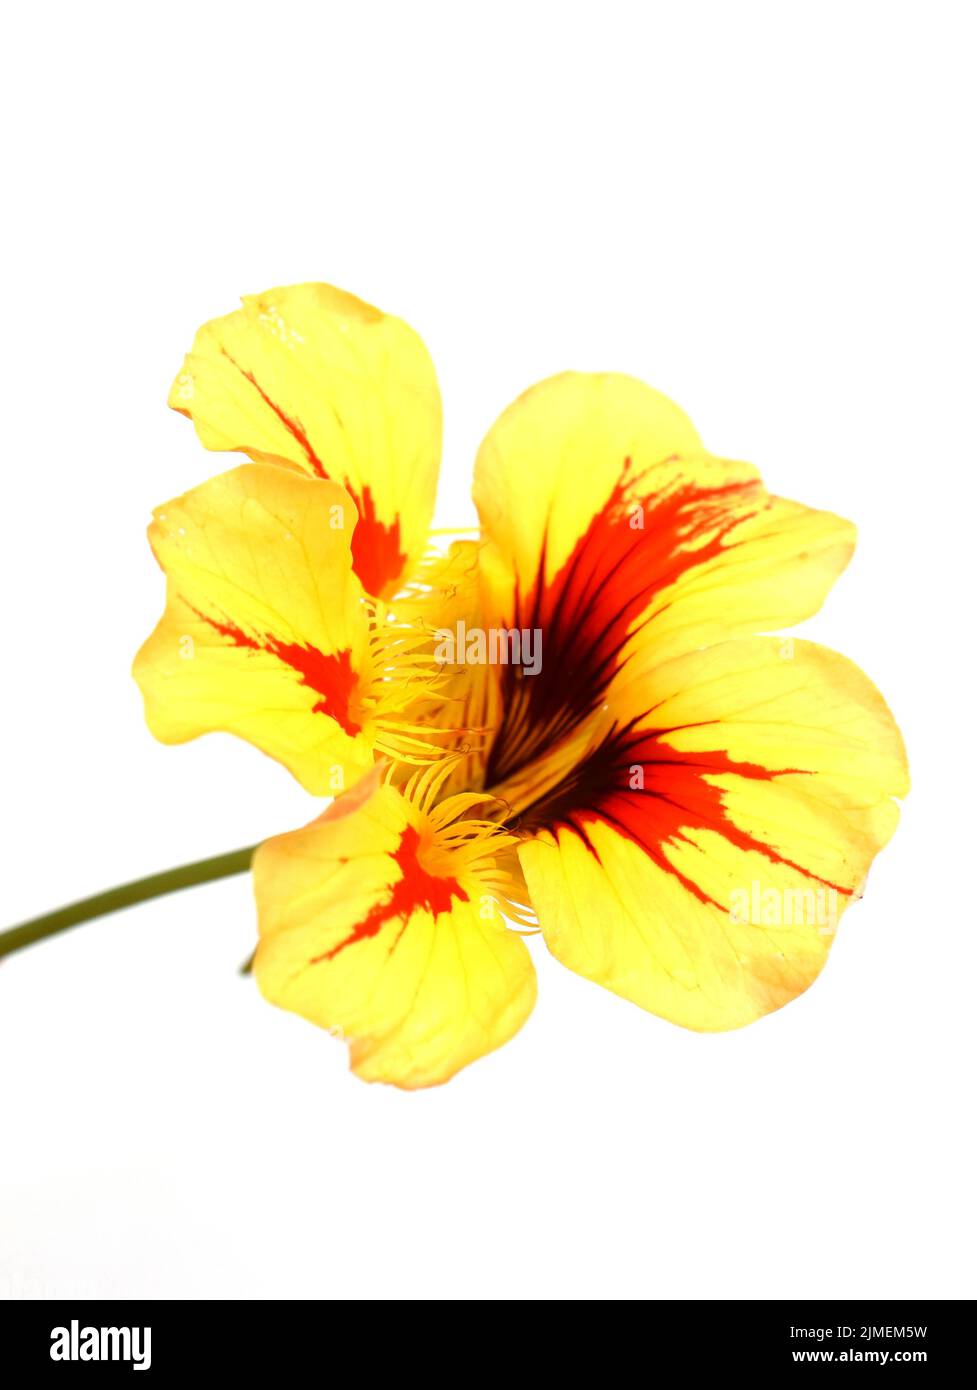 Flor roja y amarilla del jardín nasturtium Tropaeolum majus aislada sobre fondo blanco Foto de stock